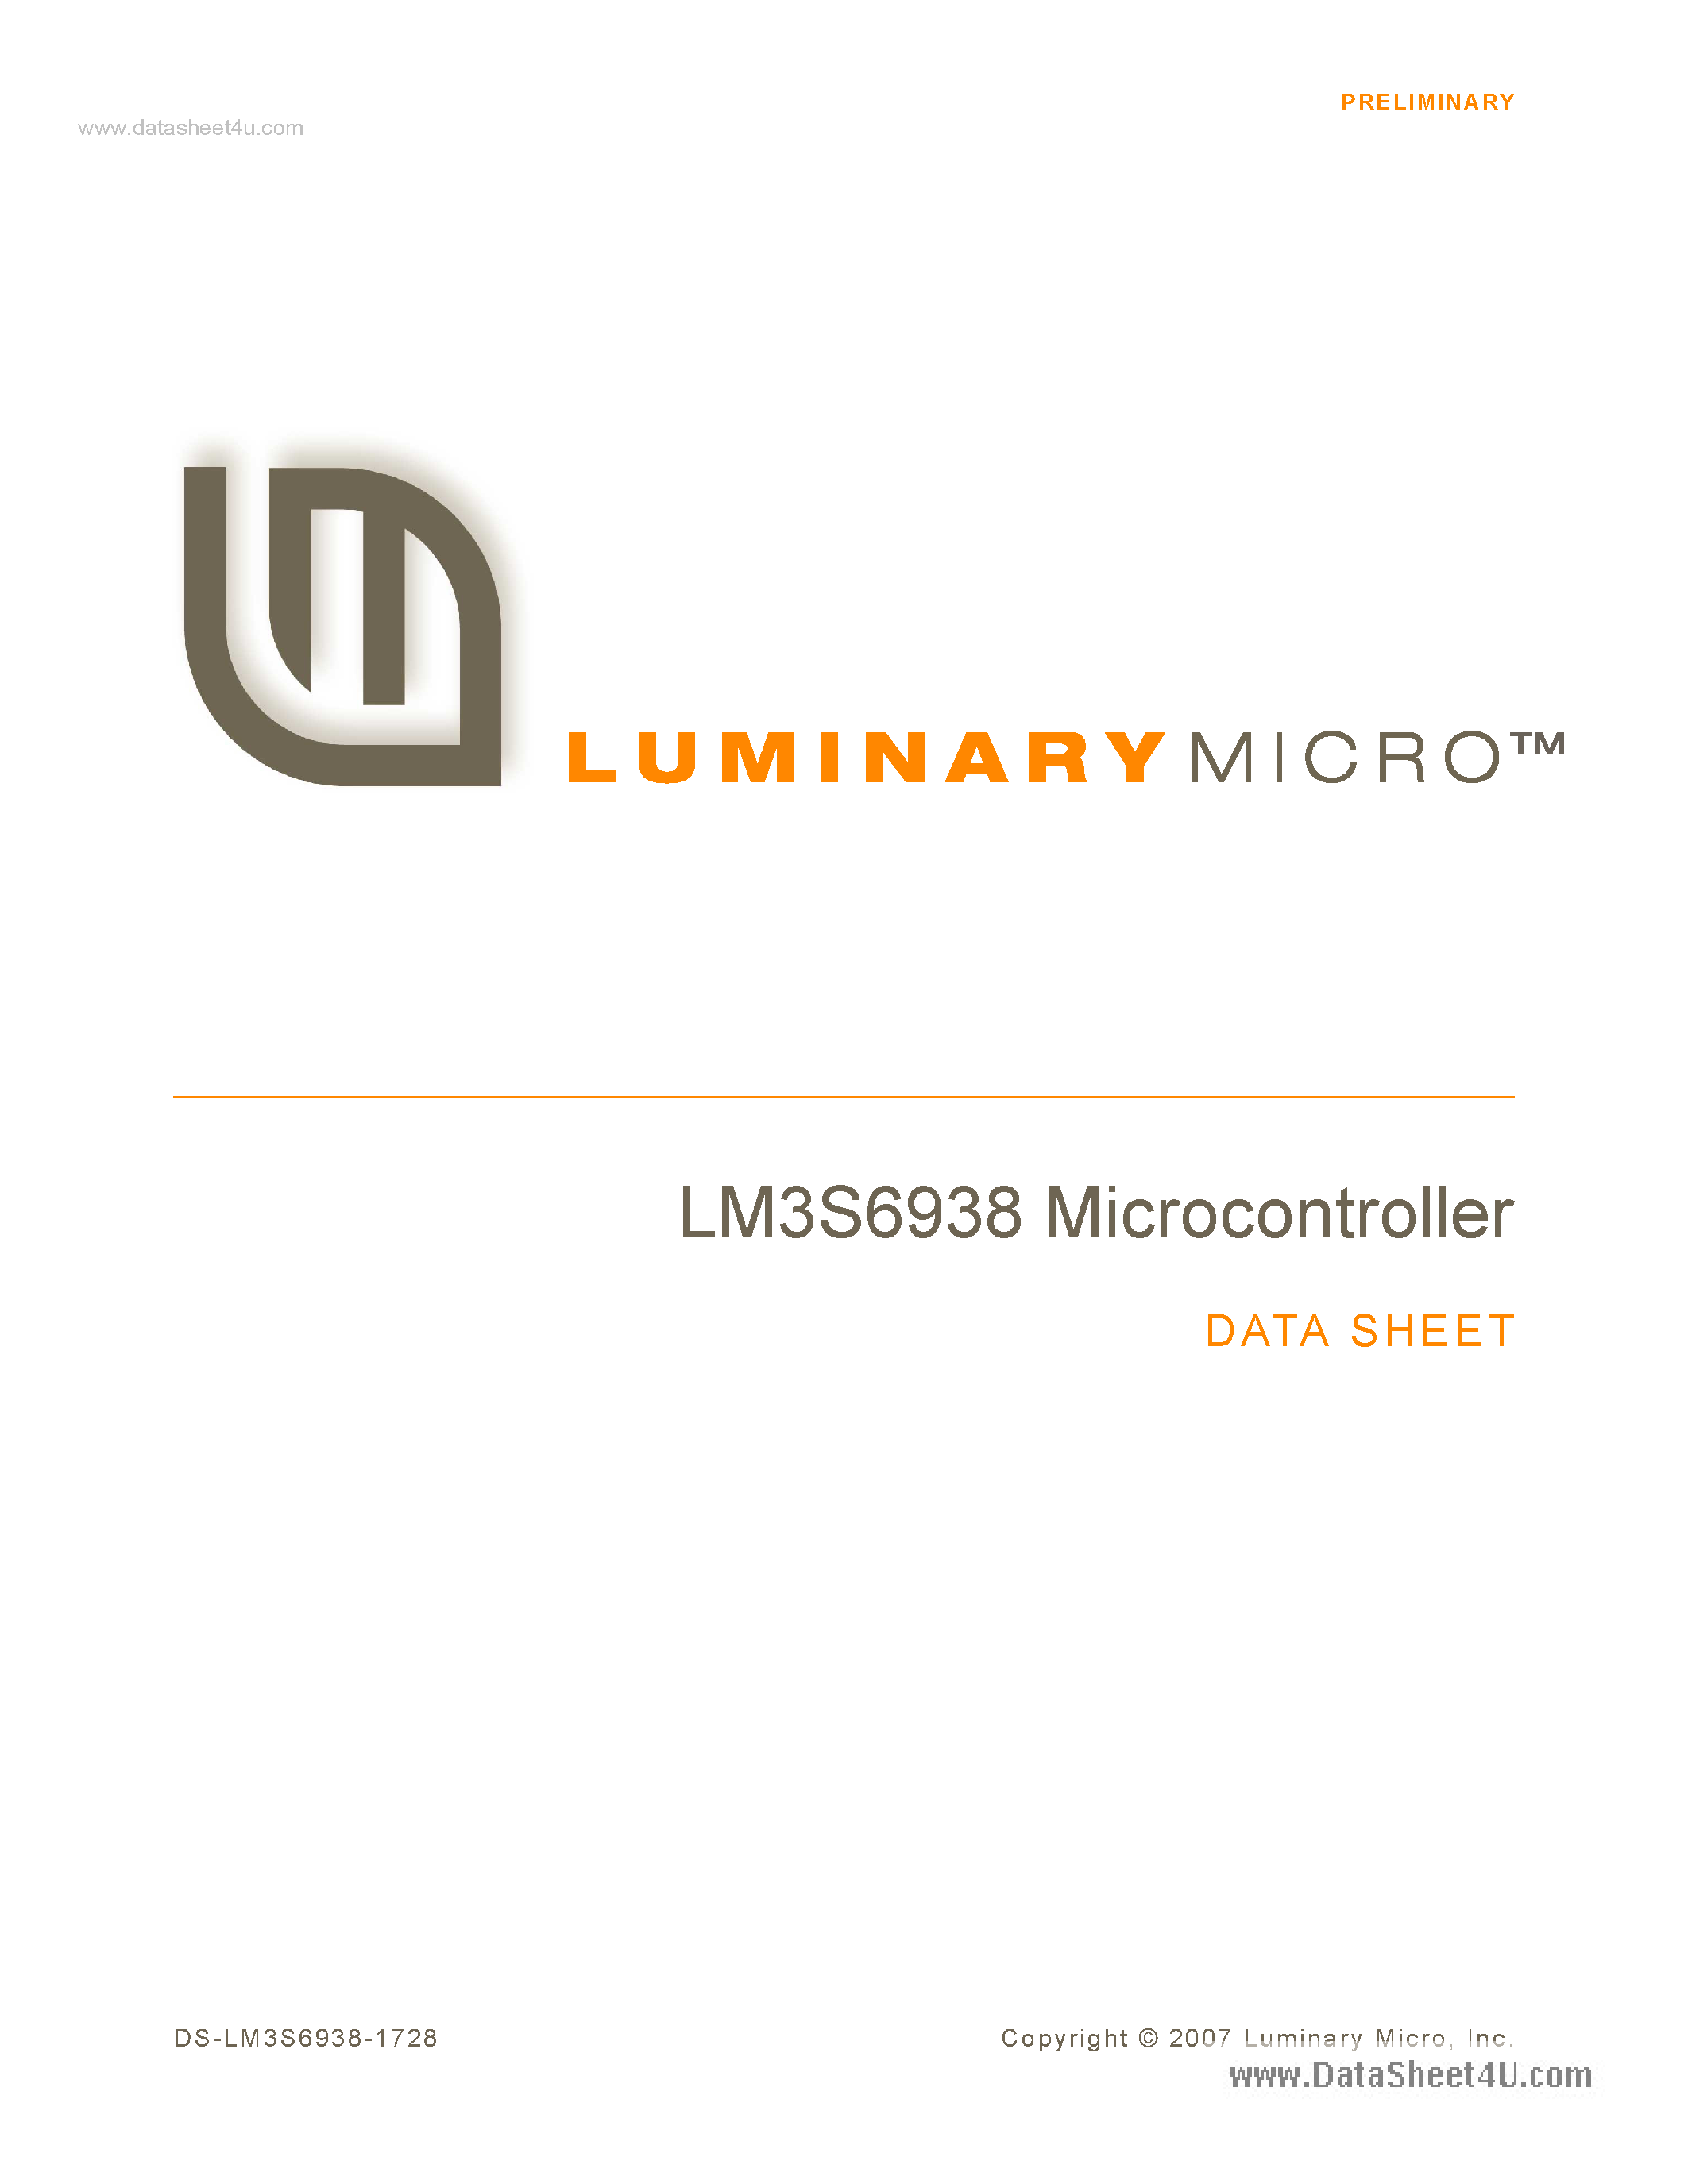 Даташит LM3S6938 - Microcontroller страница 1